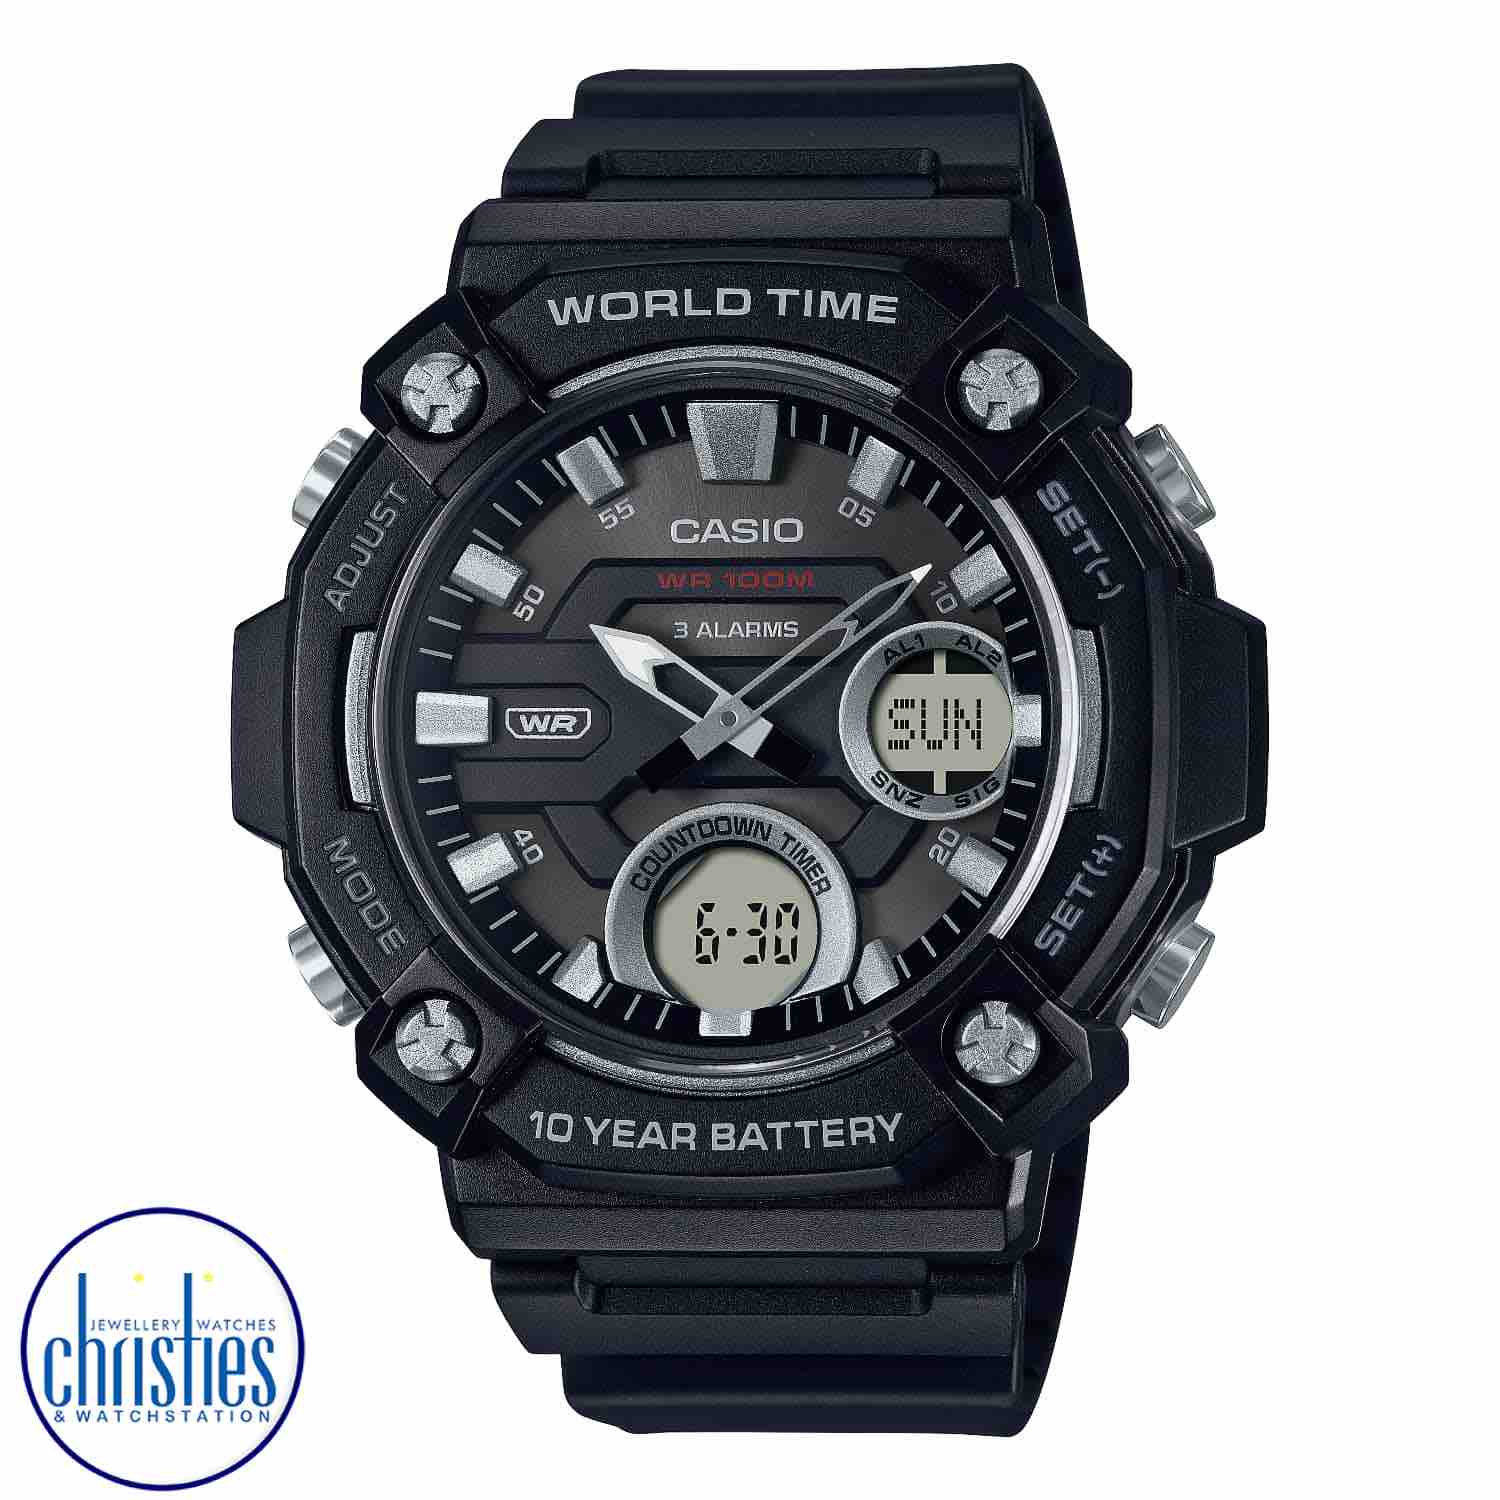 AEQ120W-1A Casio 100 Metre 10 Year Battery Watch cheap casio watches nz